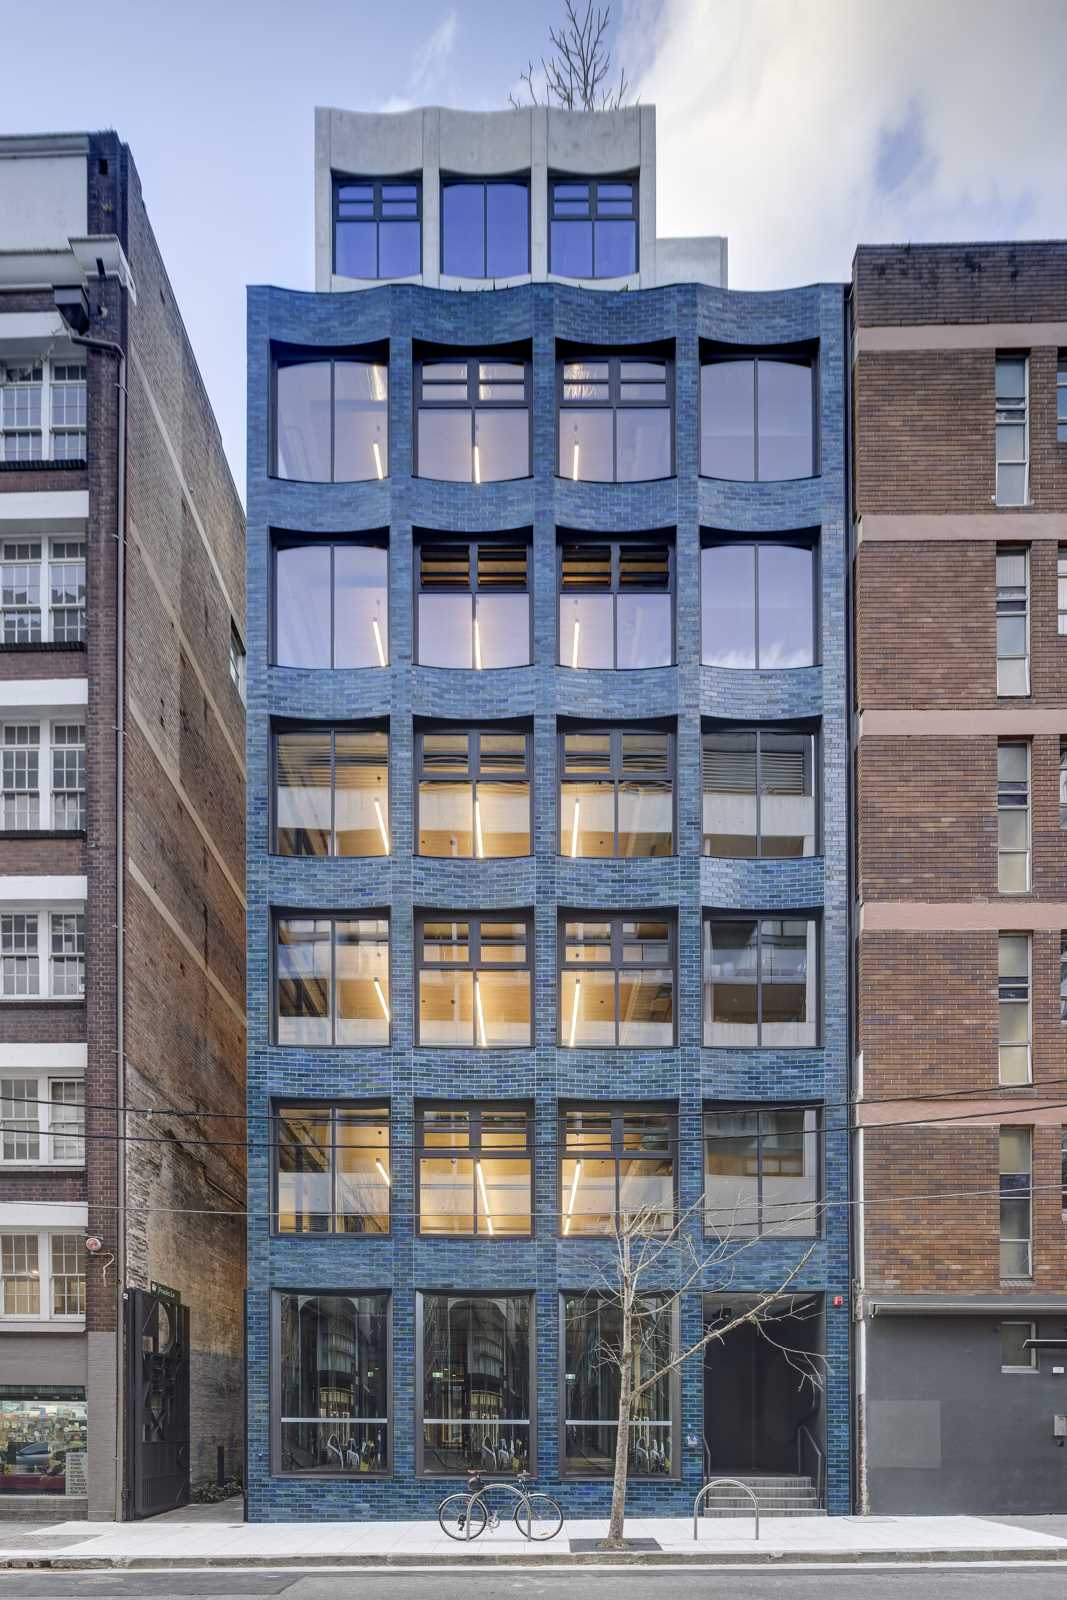 A building with a scalloped facade and aquamarine glazed bricks.